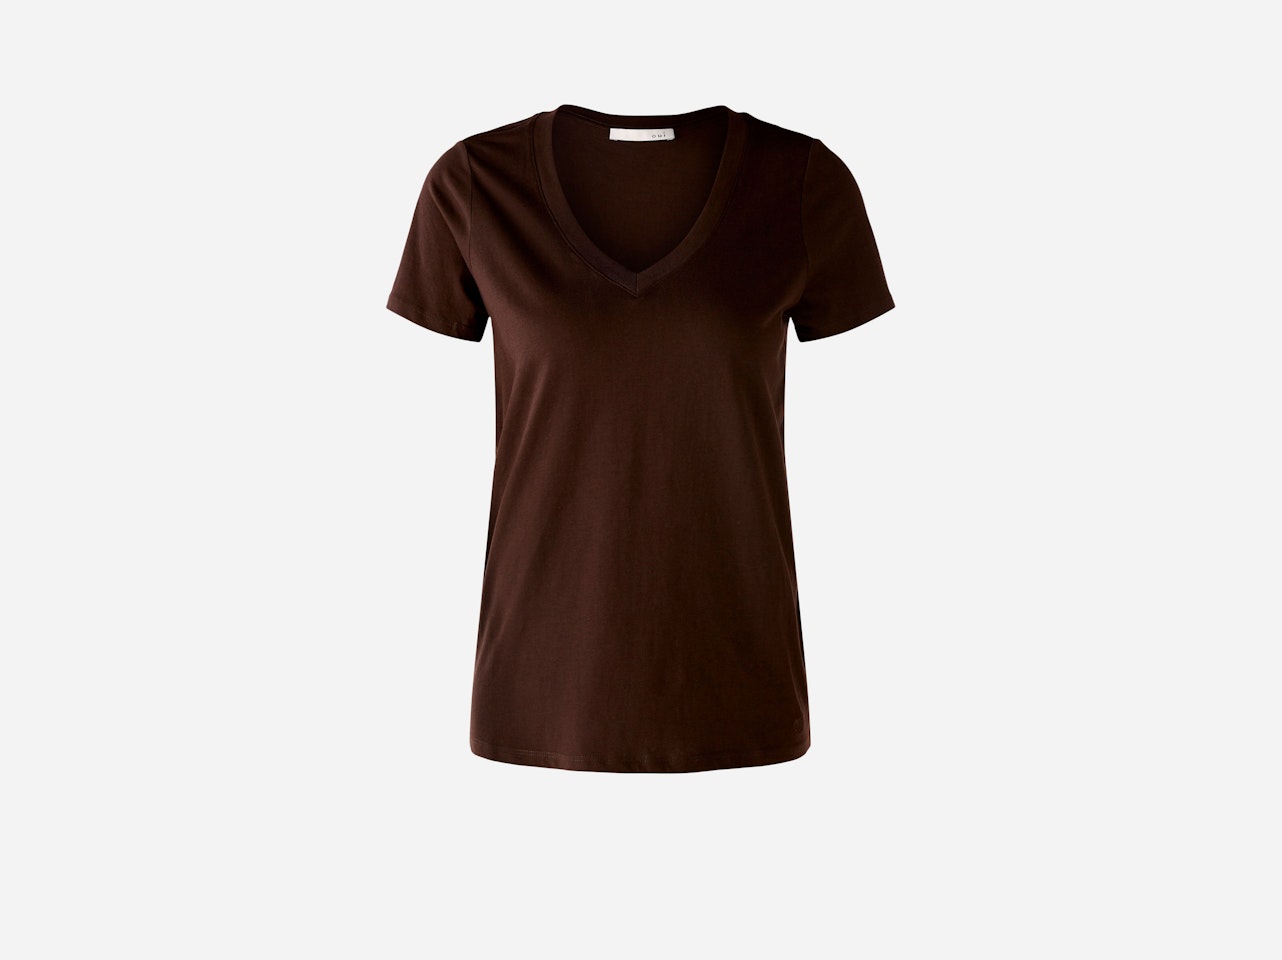 Bild 1 von CARLI T-shirt 100% organic cotton in chocolate fudge | Oui